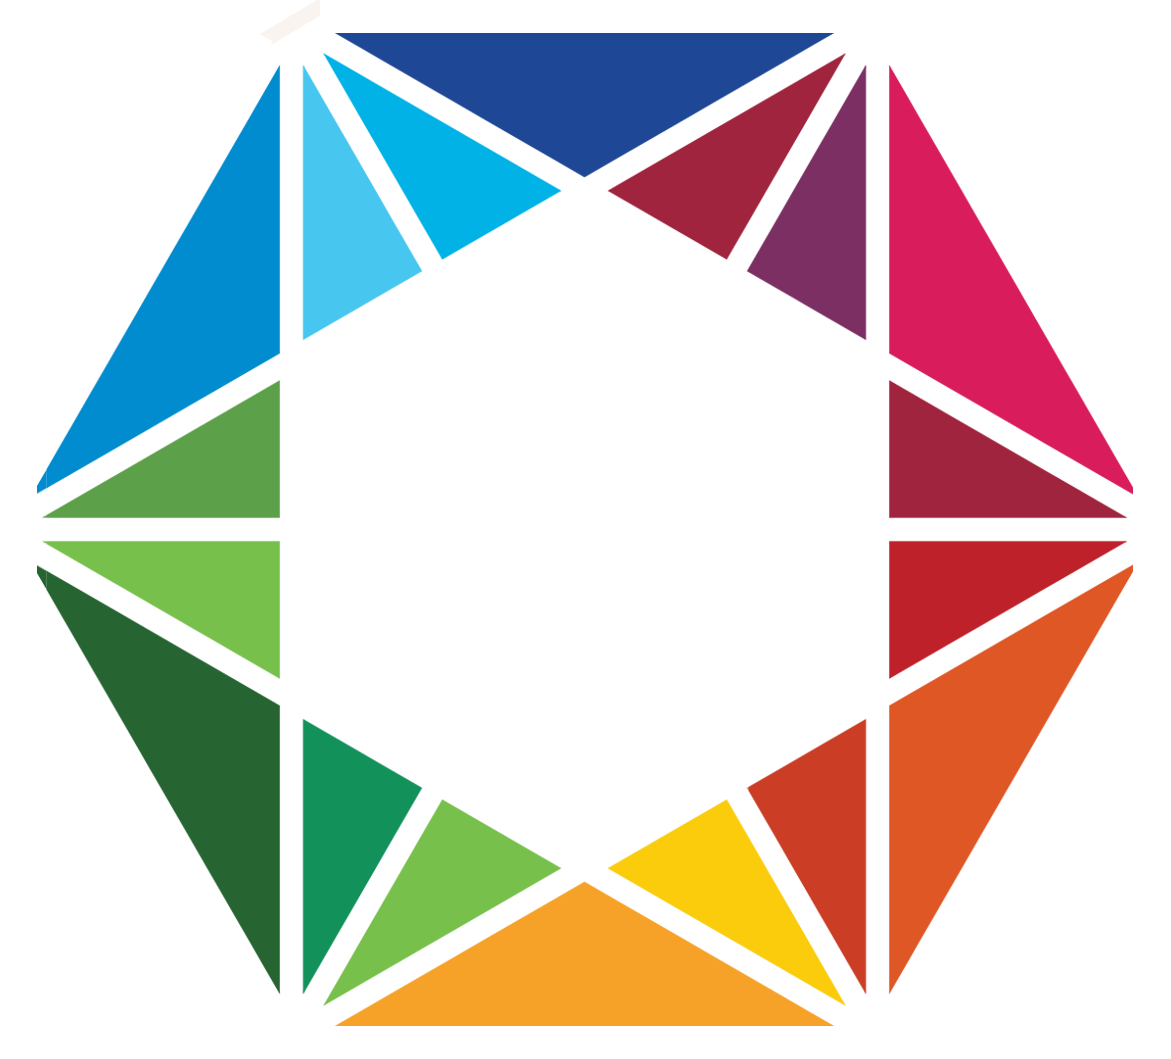 Spectrum group logo icon